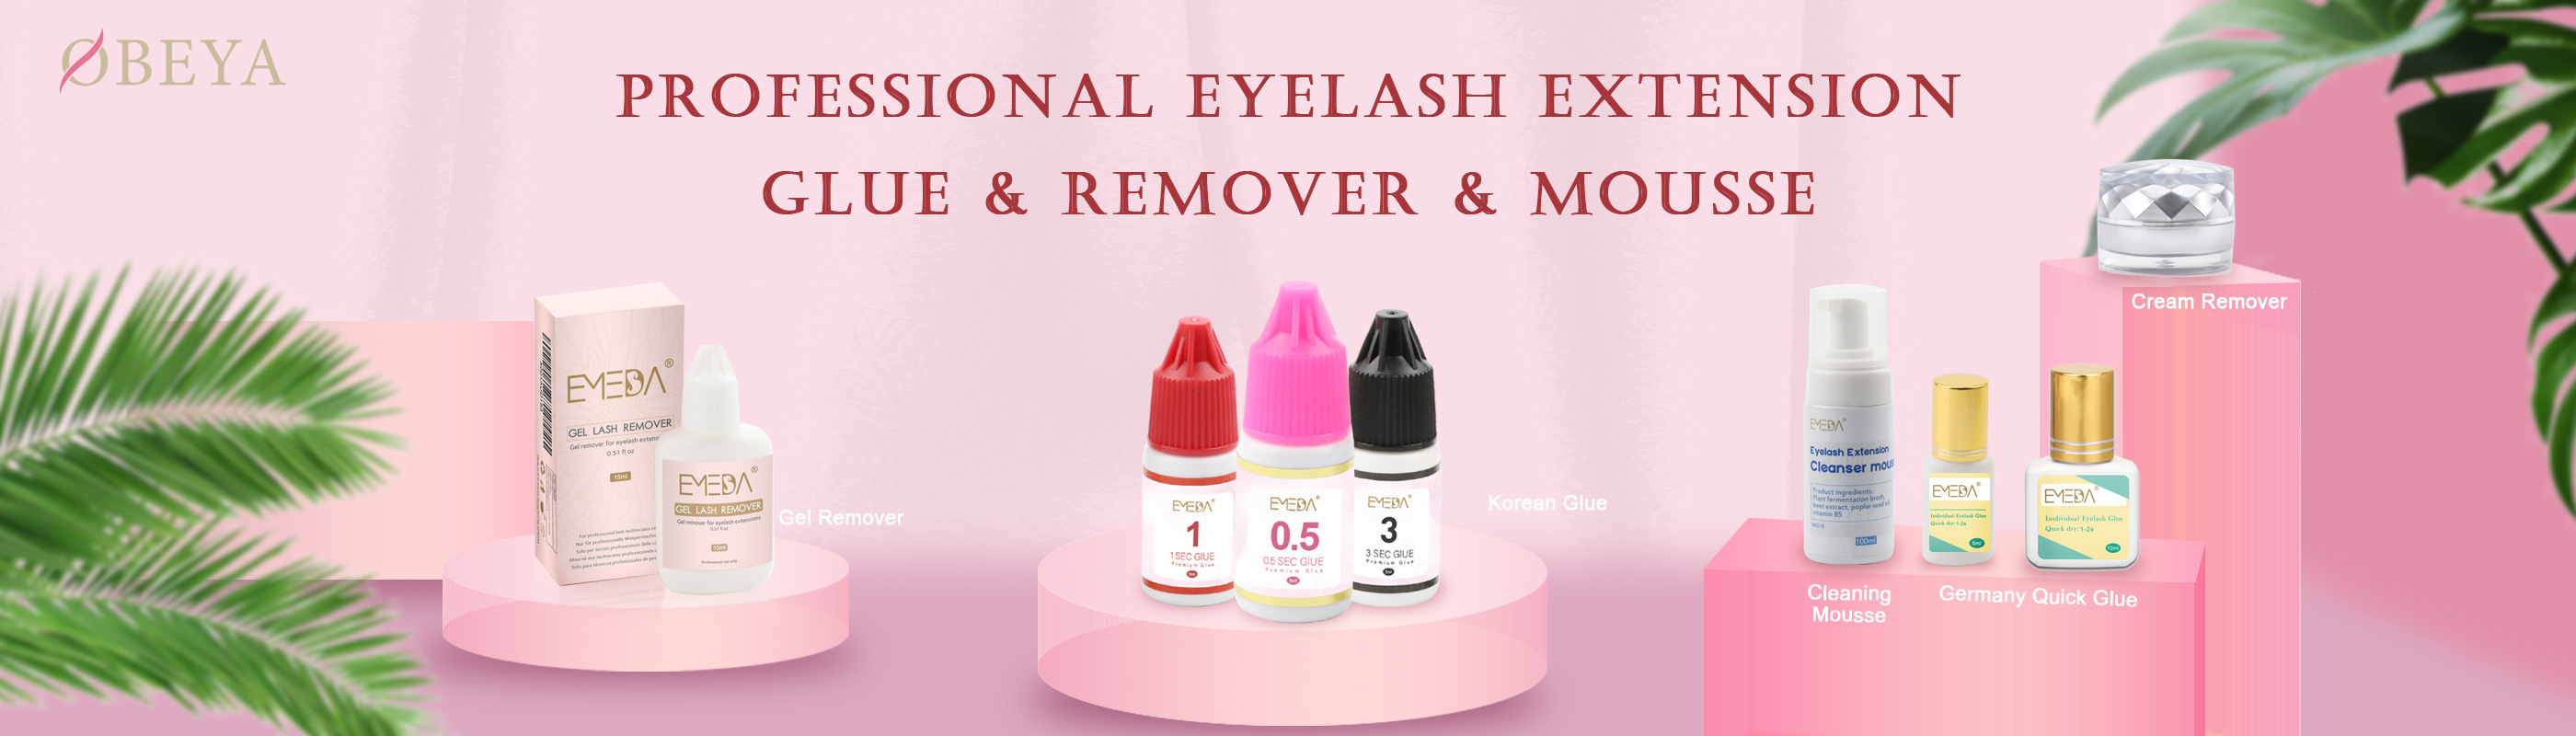 obeya-eyelash-extension-glue